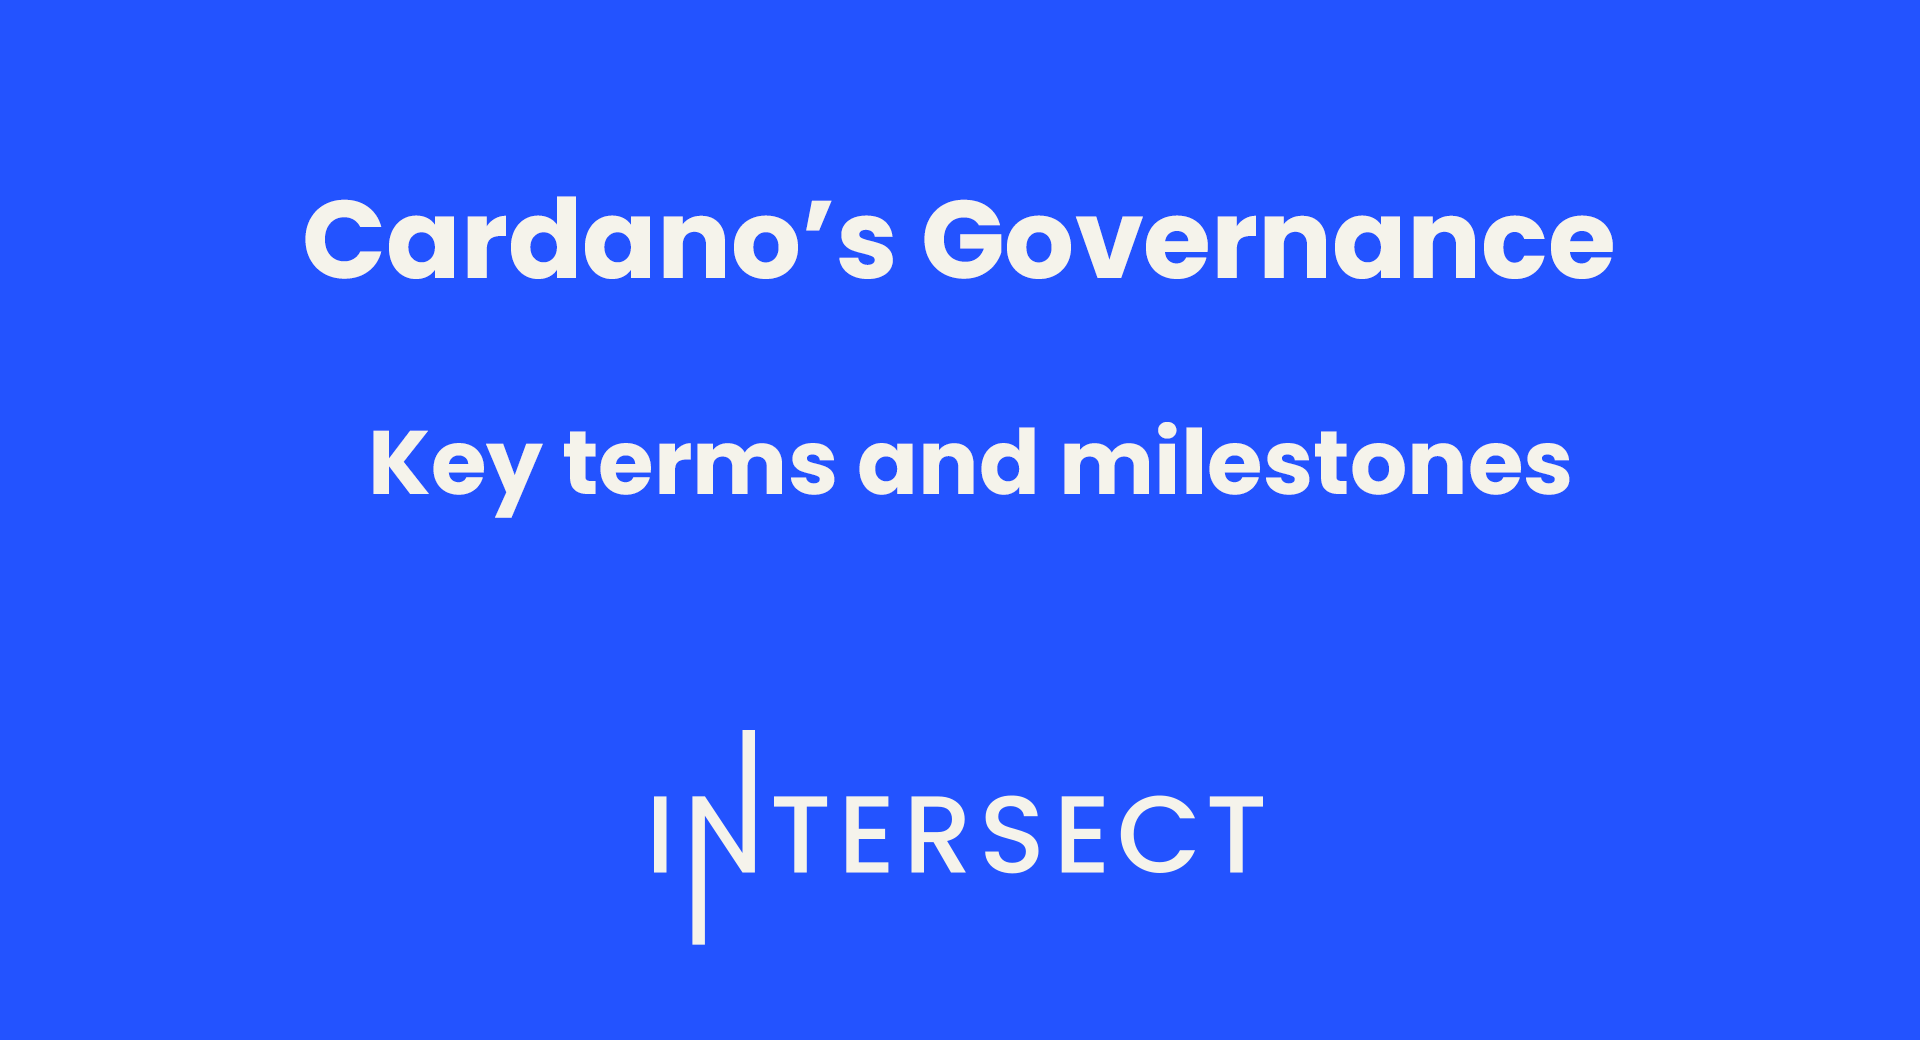 Cardano’s Governance - Key terms and milestones